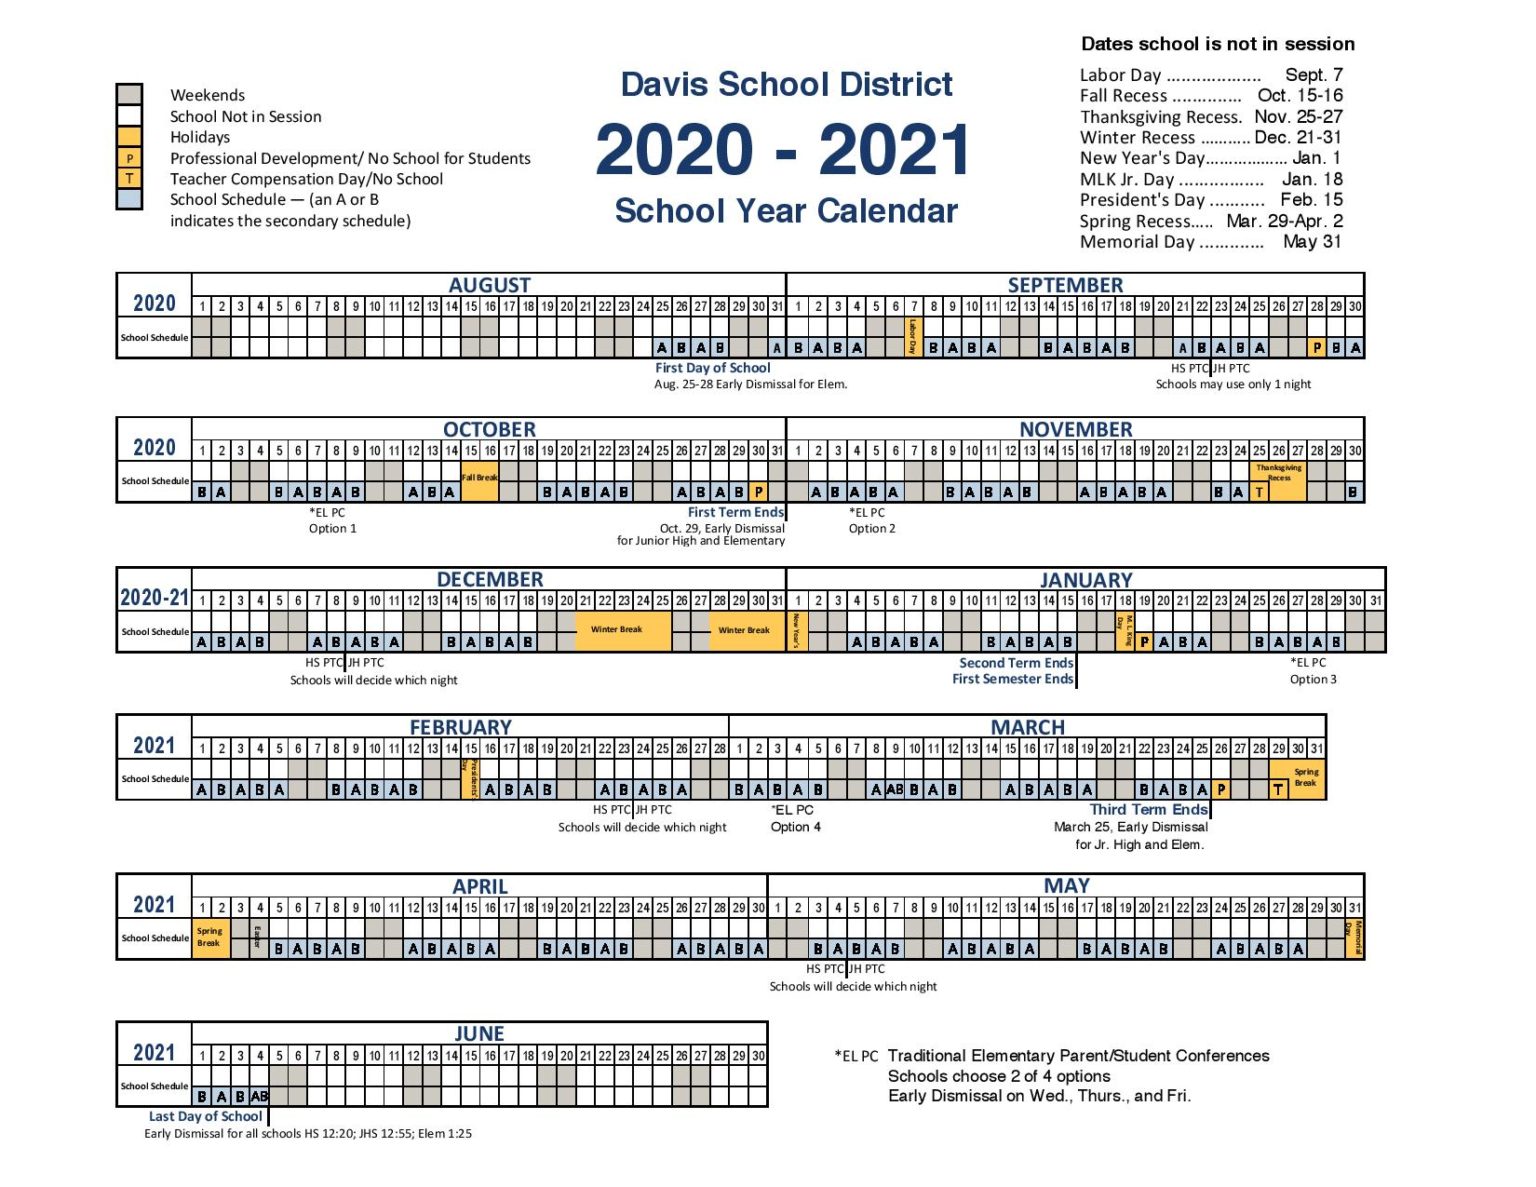 davis-school-district-calendar-2020-2021-in-pdf-format